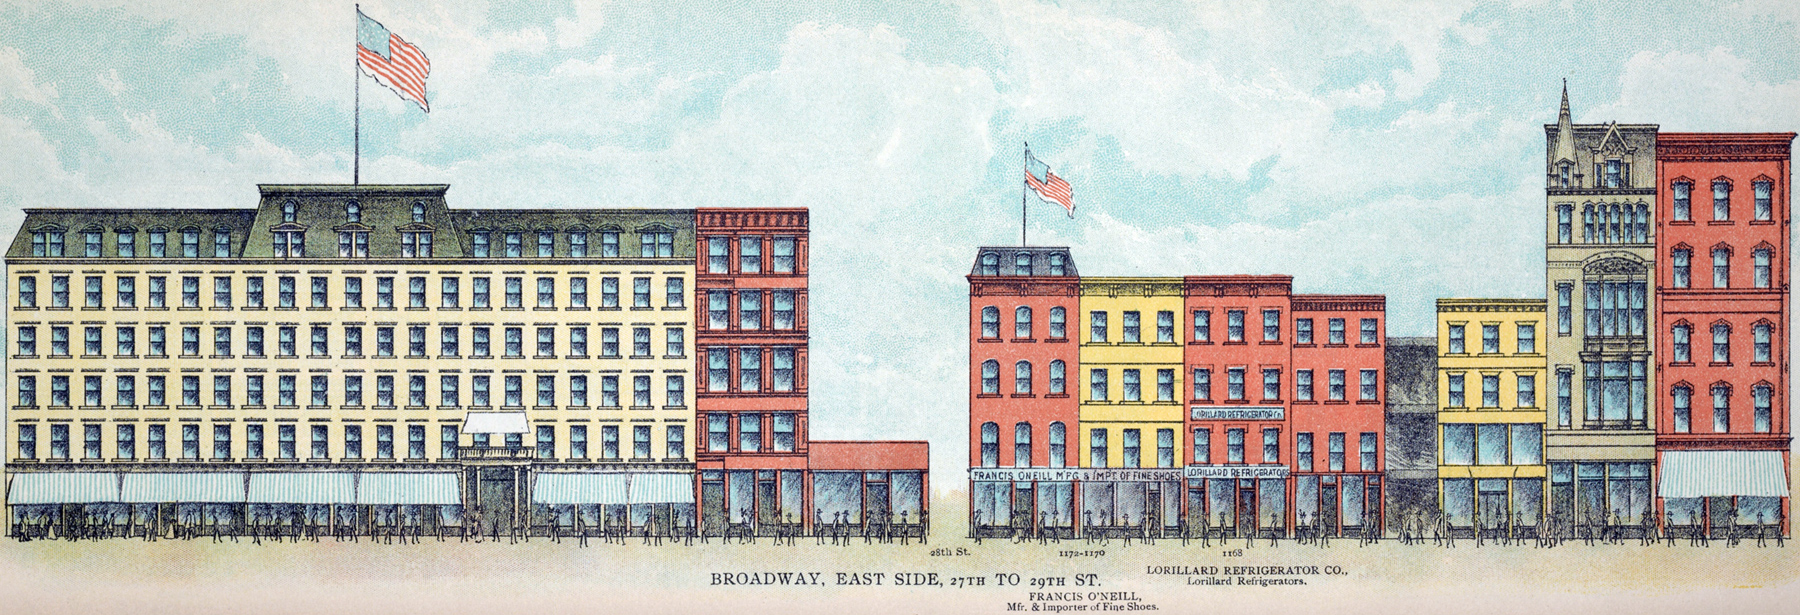 19th century Broadway